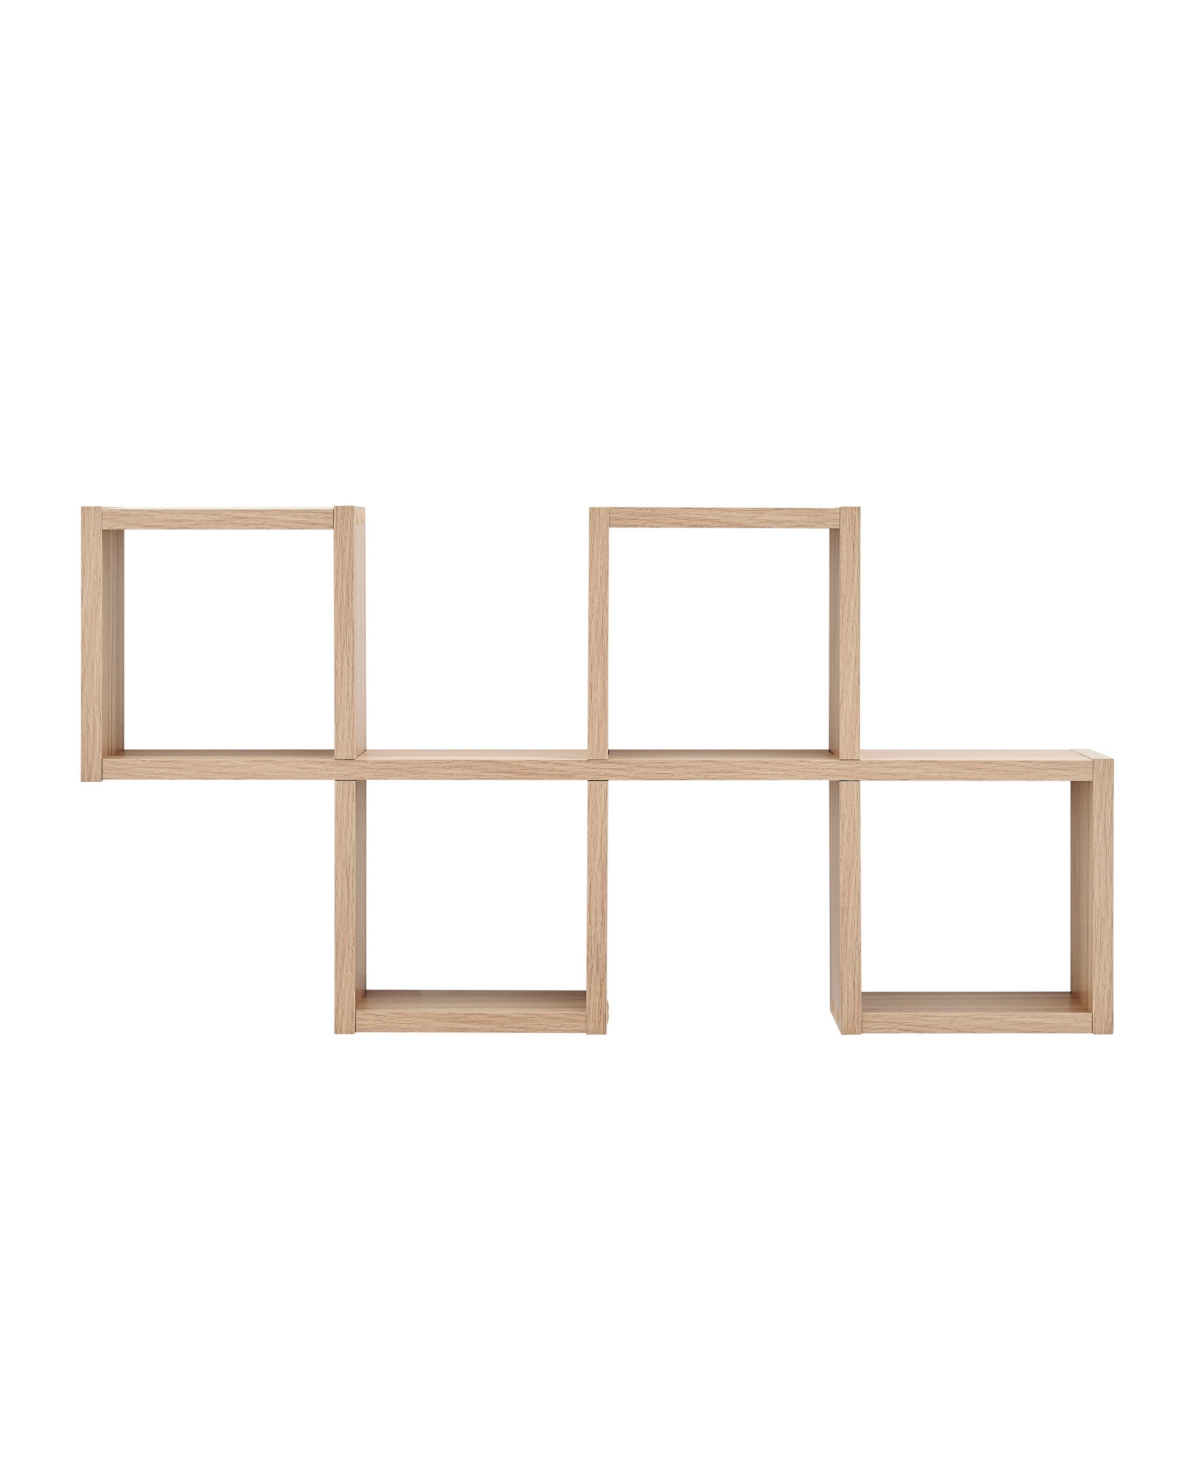 Shop Danya B Cubby Chessboard Wall Shelf, Horizontal Or Vertical In Chestnut